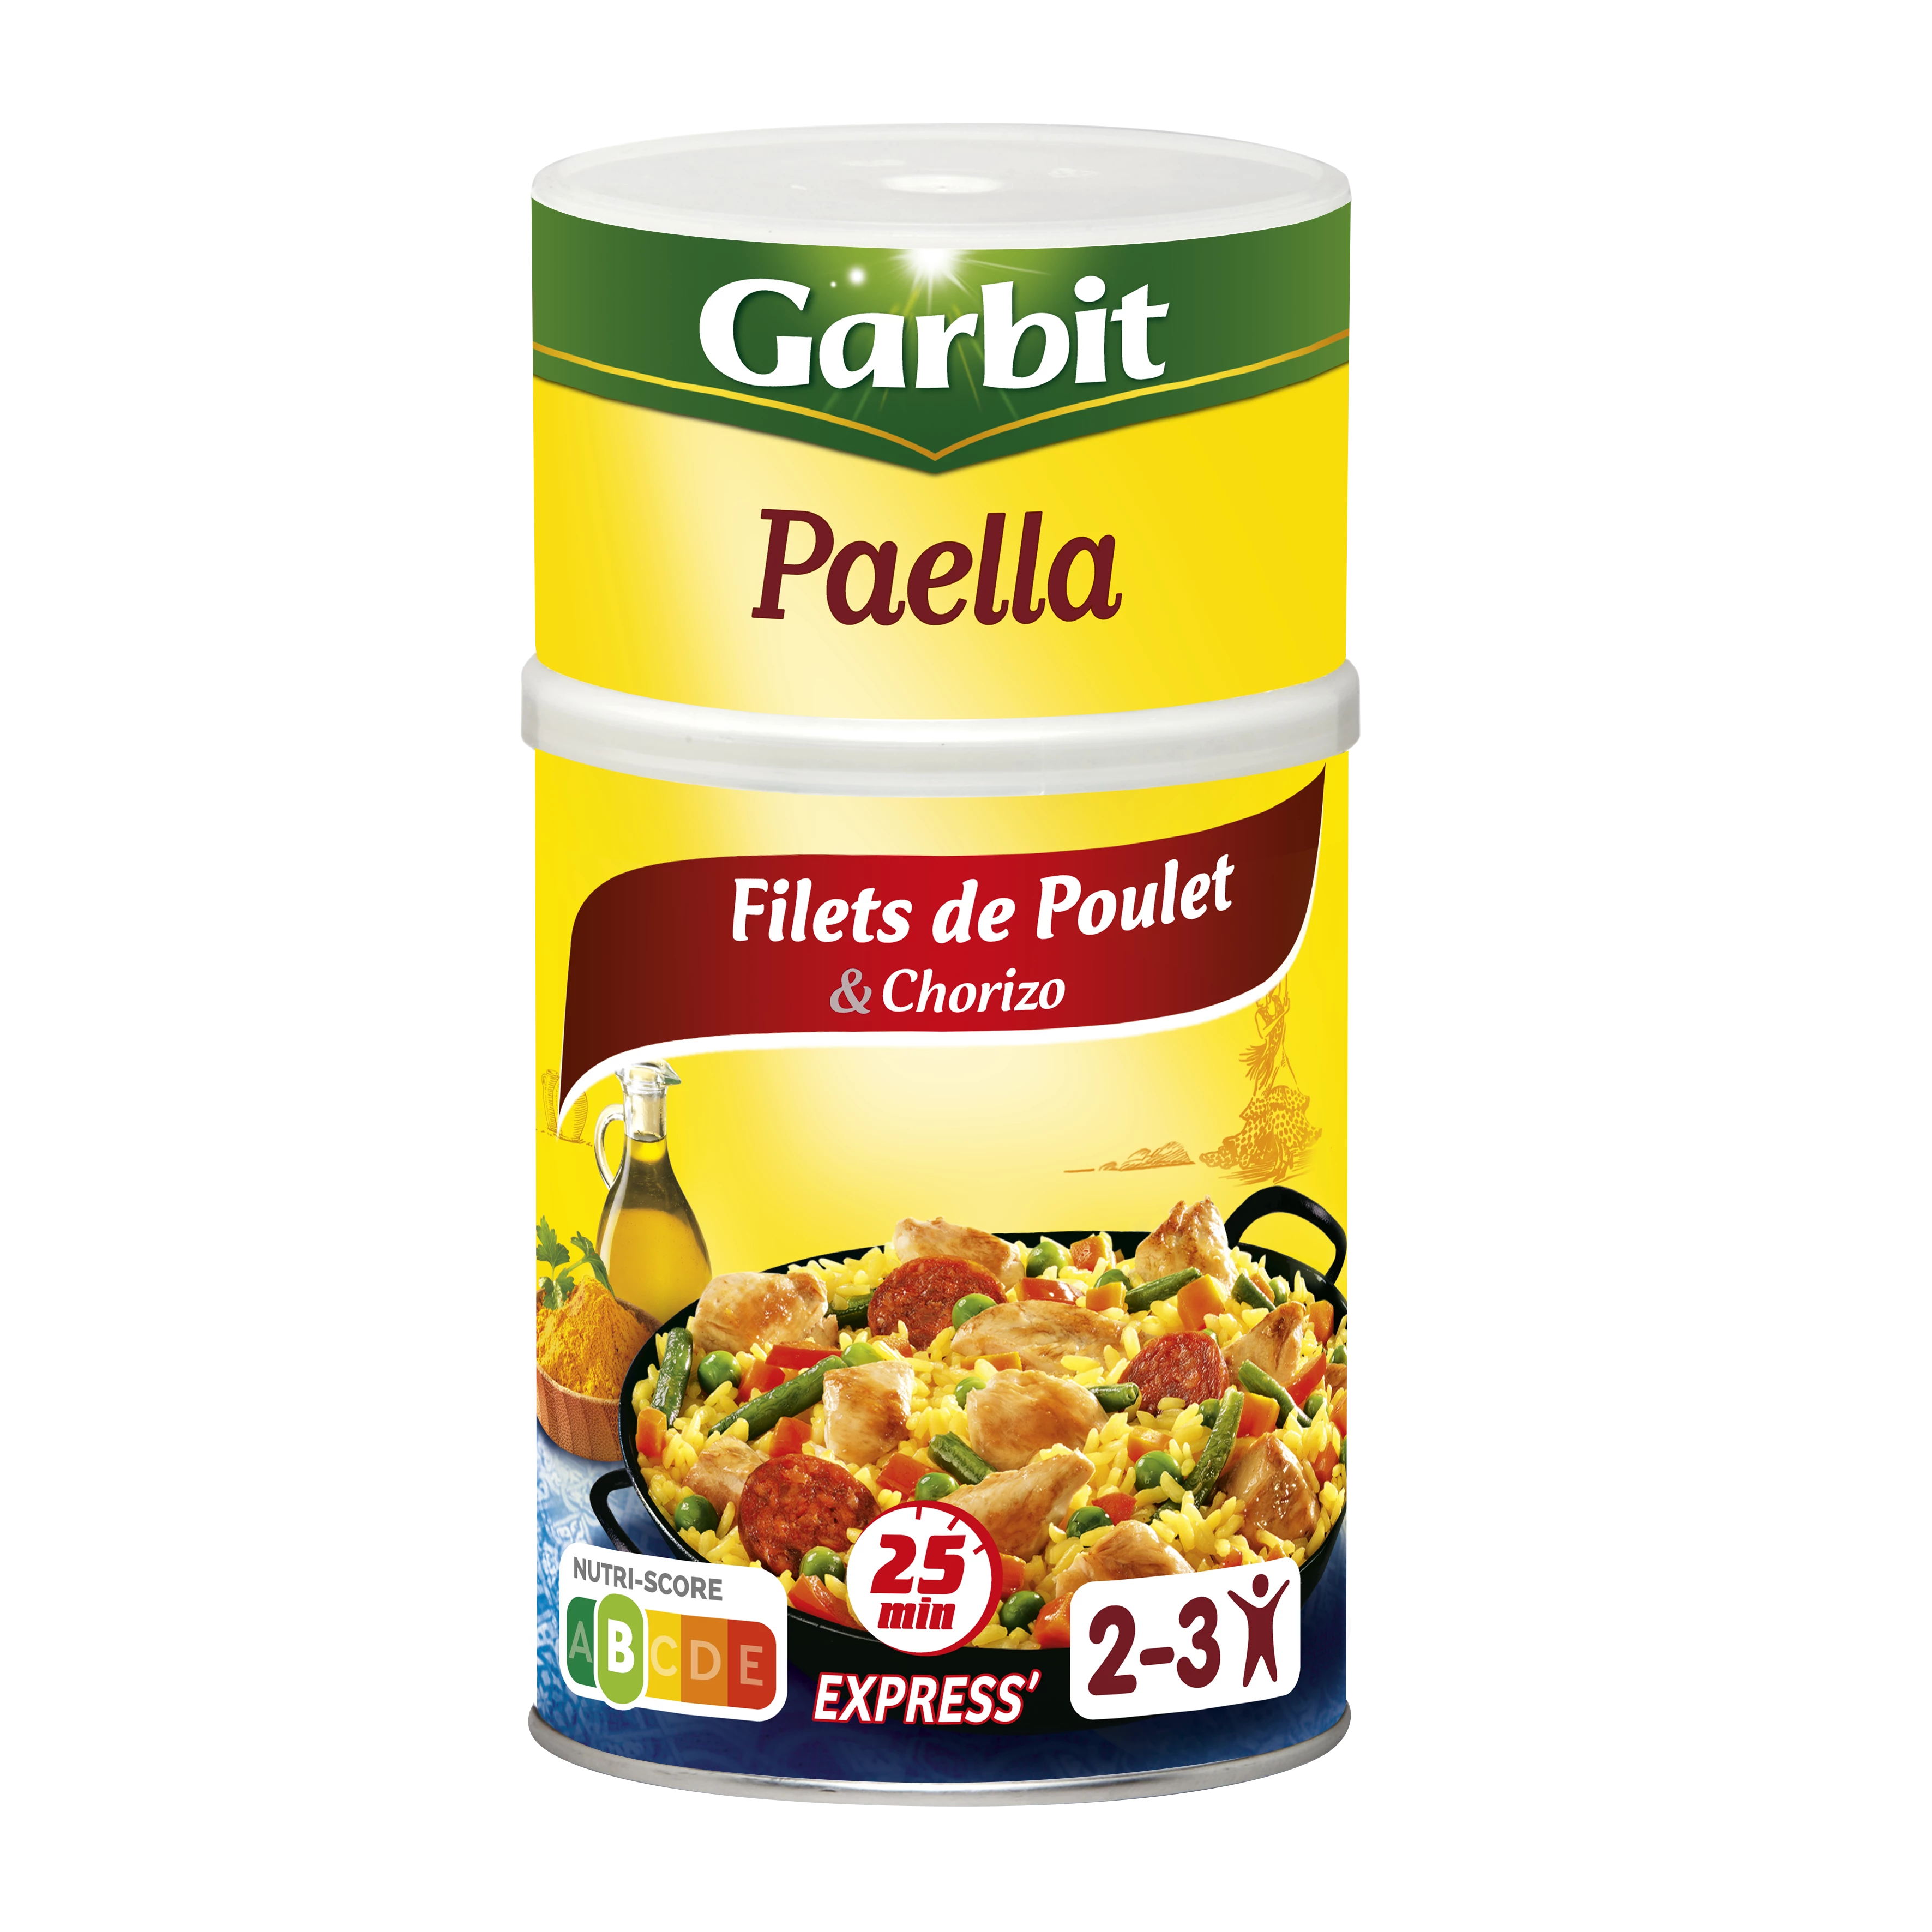 PaelLa Express Filet de Poulet et Chorizo, 960g - GARBIT